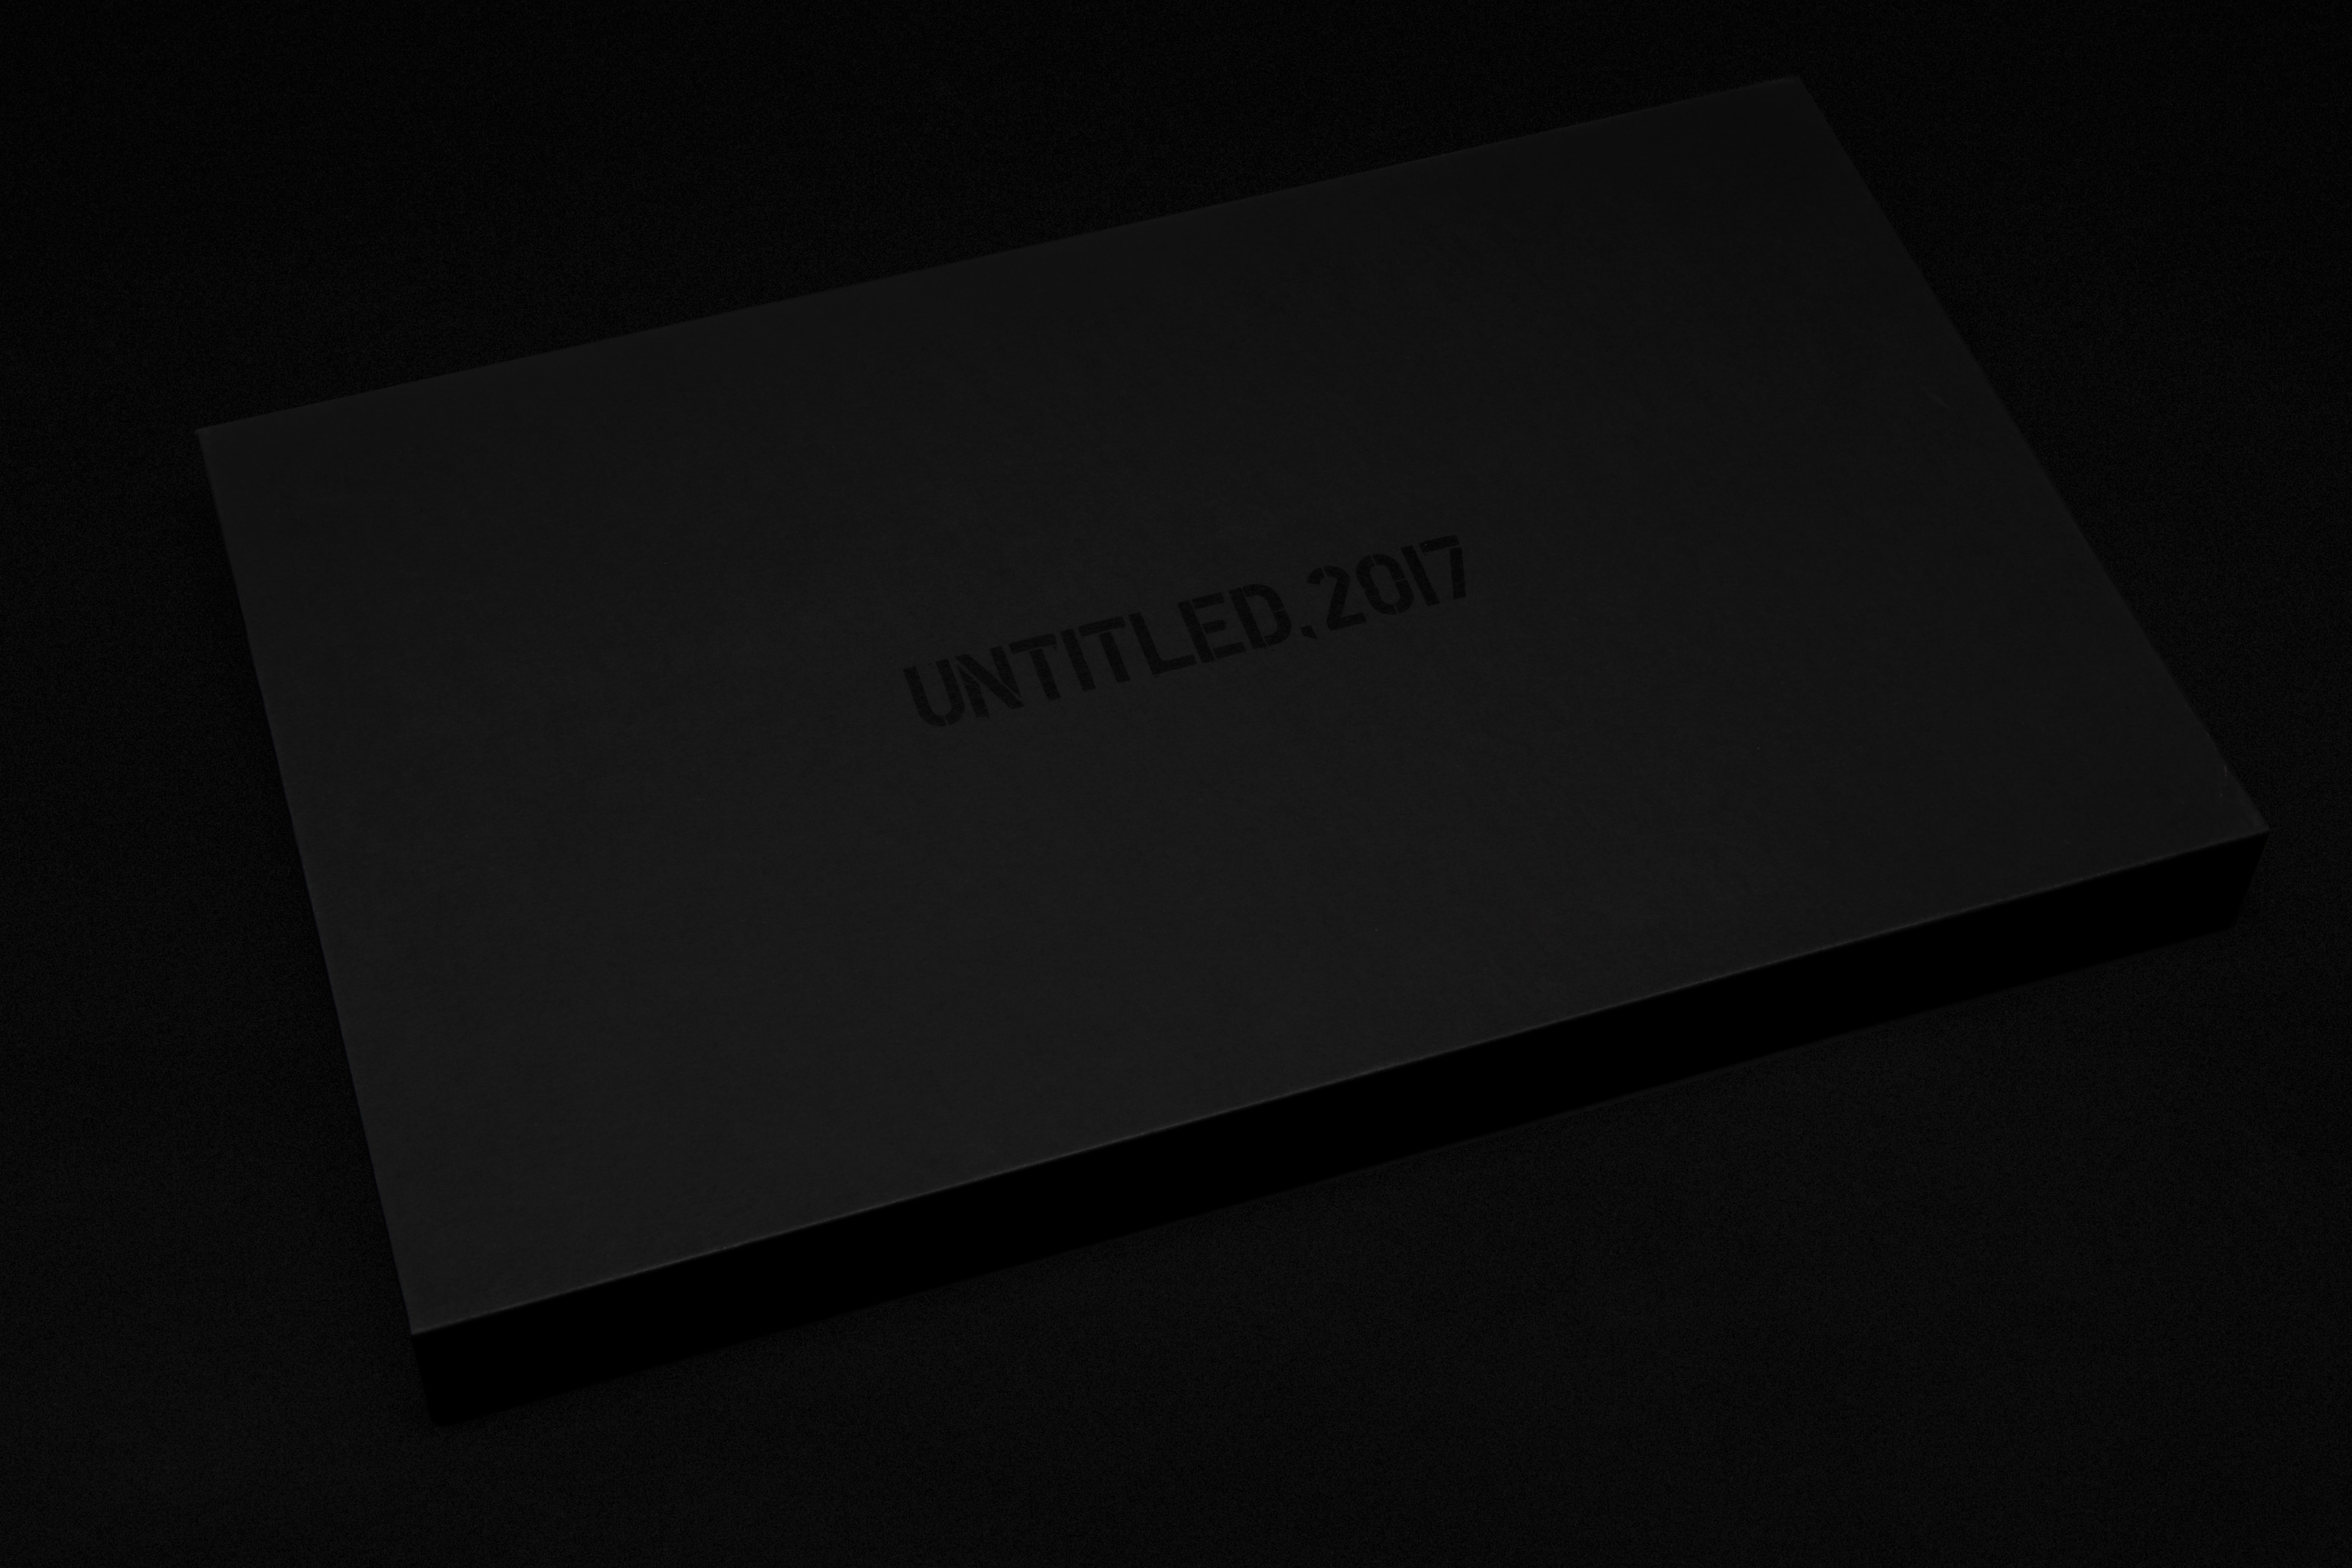 HYPEBEAST 獨家開箱 G-Dragon 之「UNTITLED, 2017 無題藝術展」周邊商品